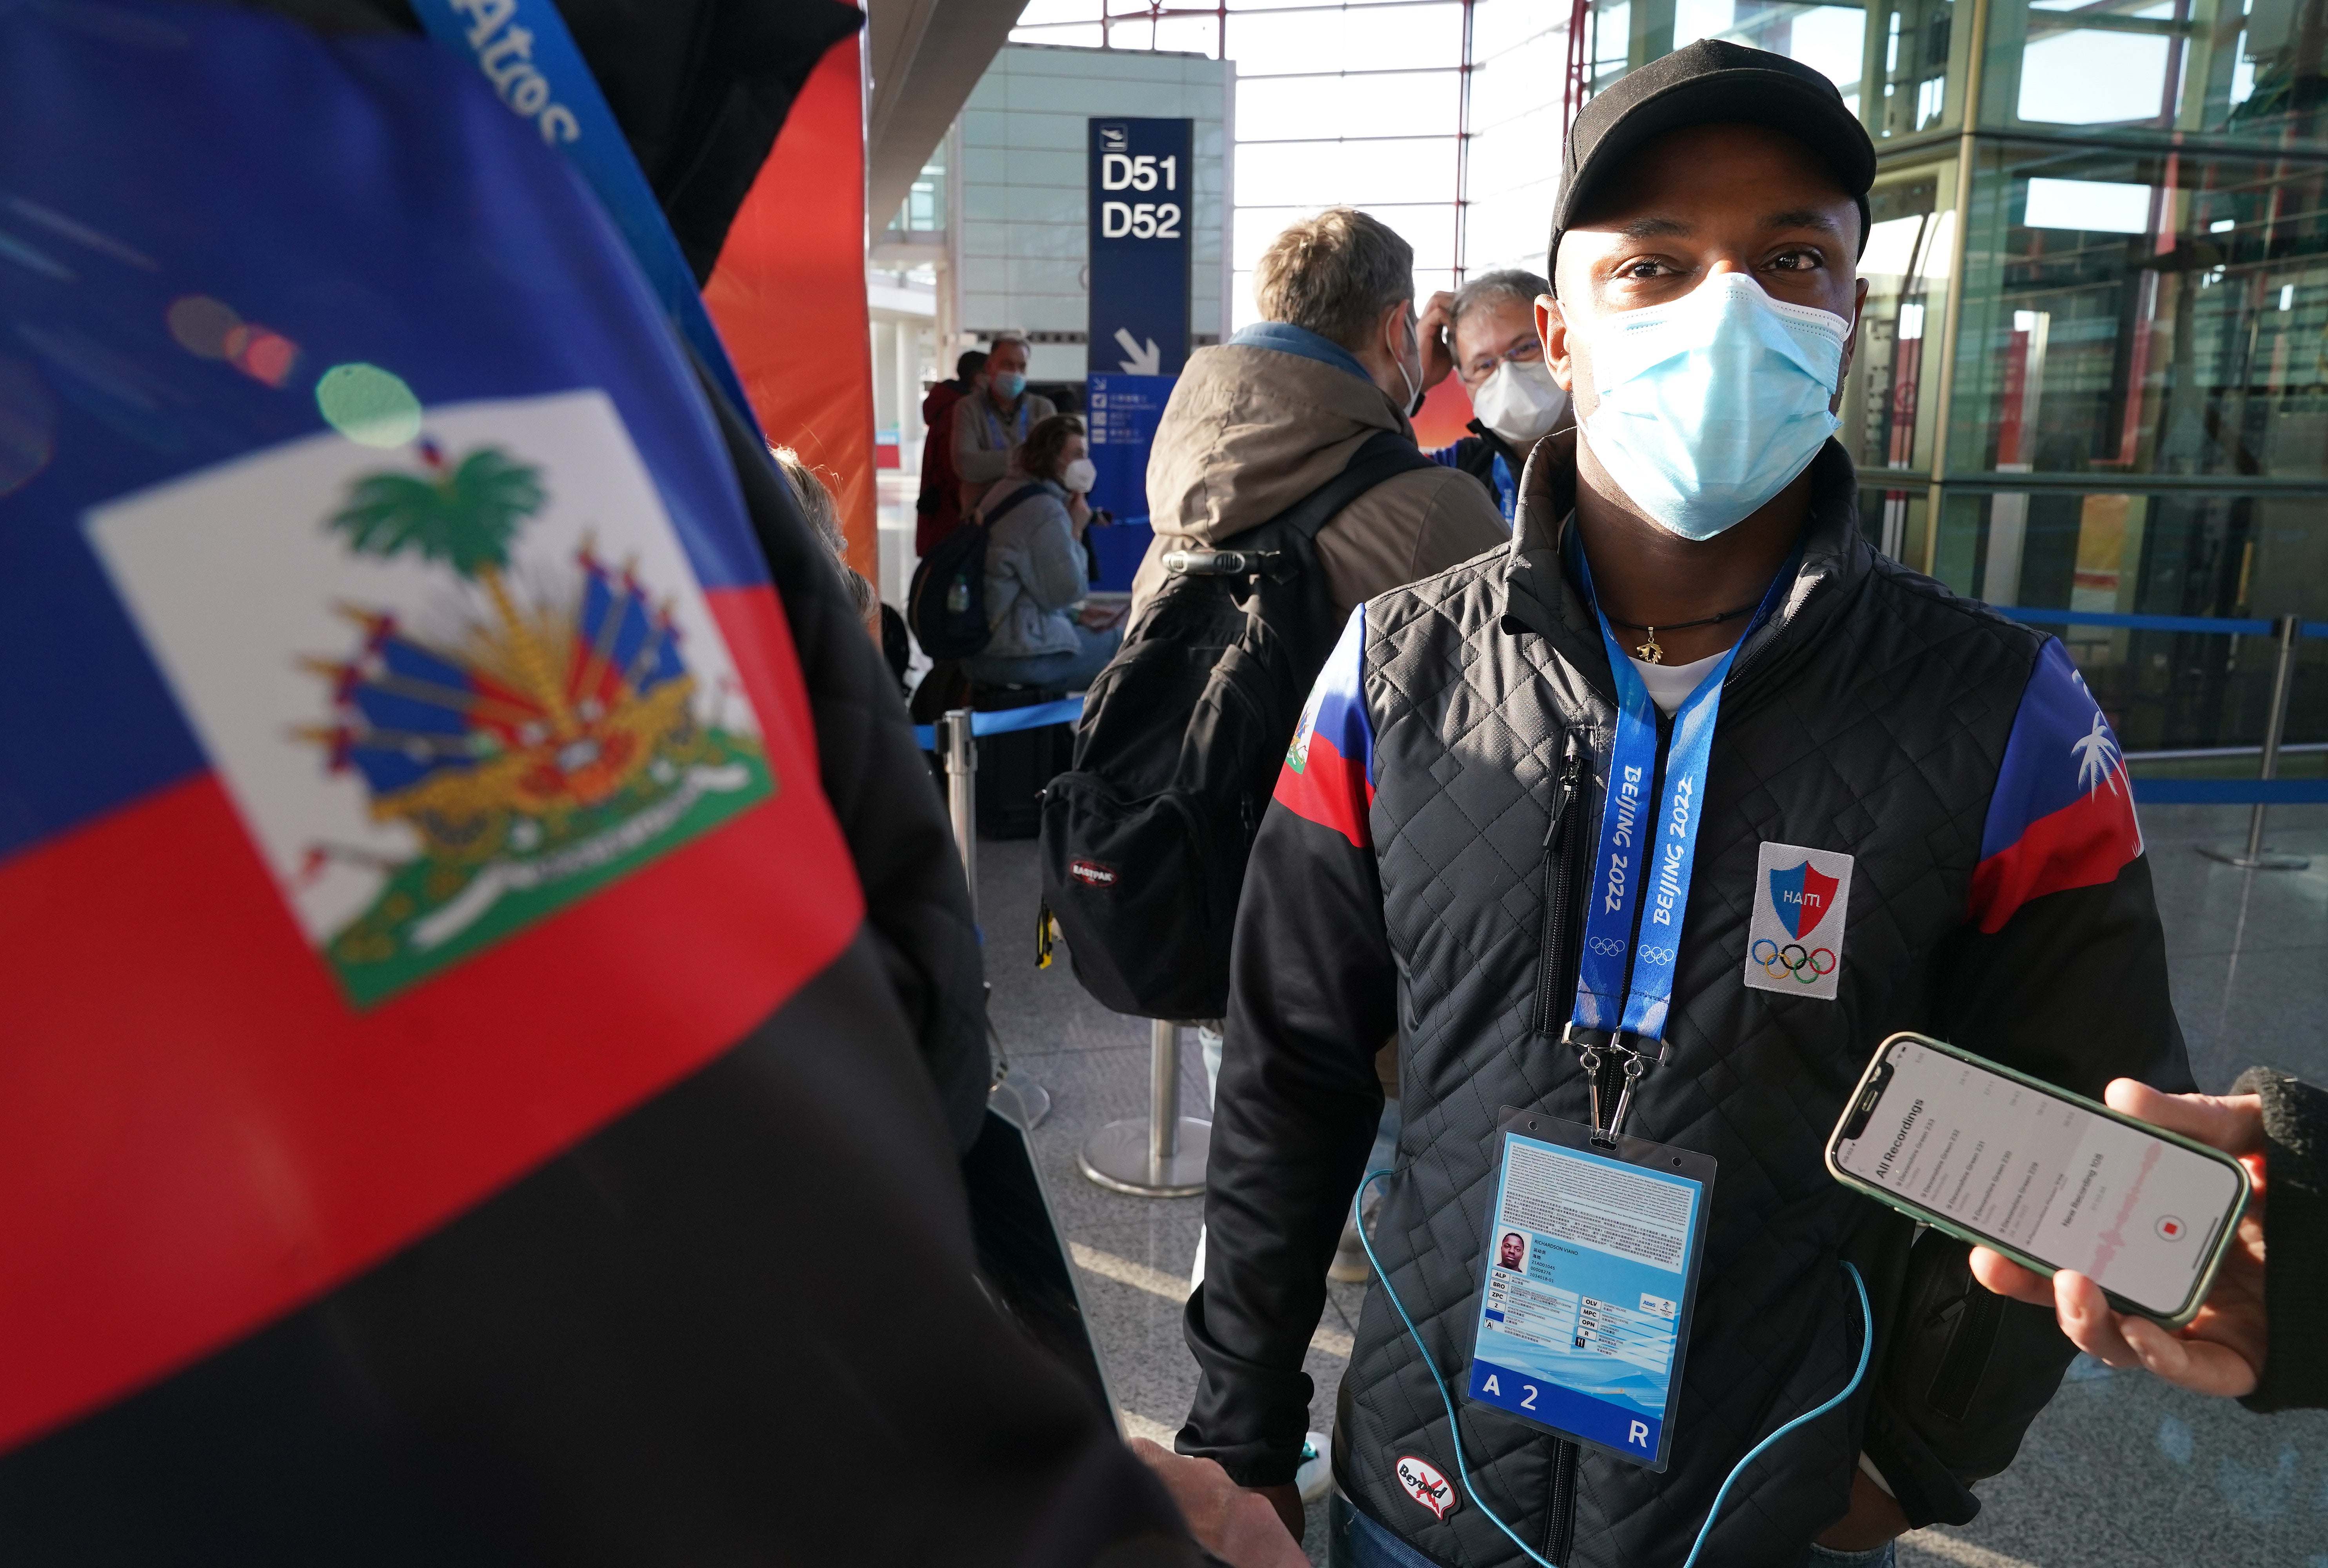 Haiti’s Richardson Viano will compete in the men’s giant slalom